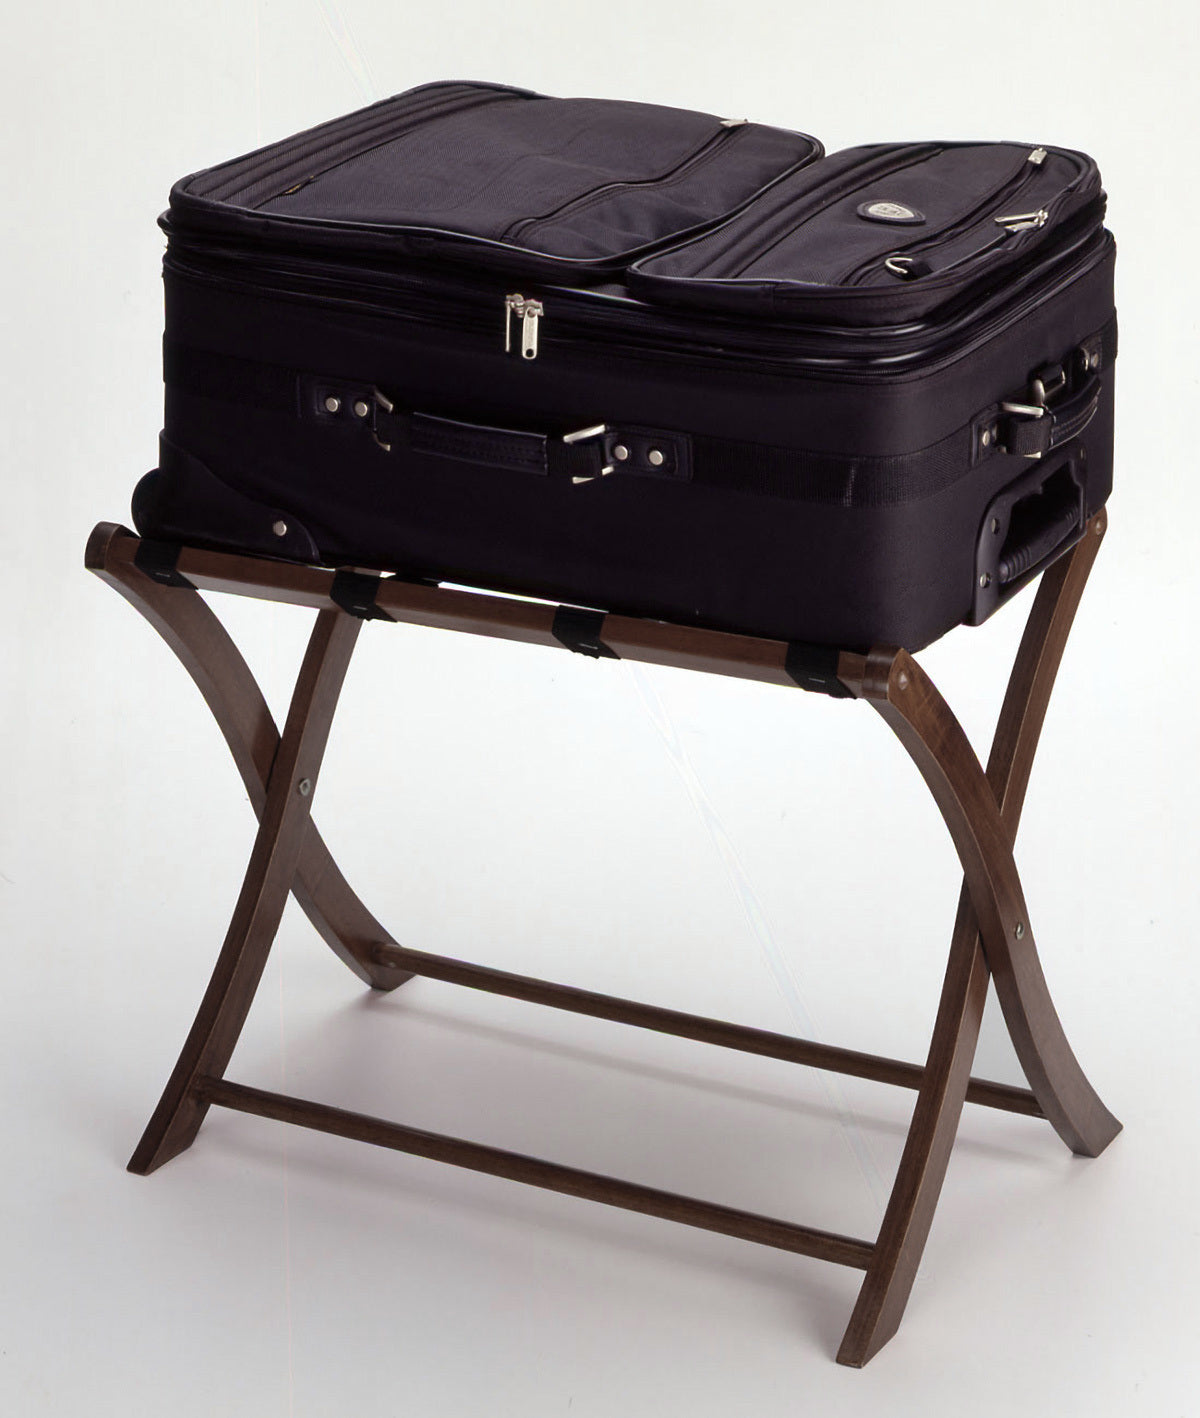 A Scarlett Luggage Rack Walnut with black straps on it.